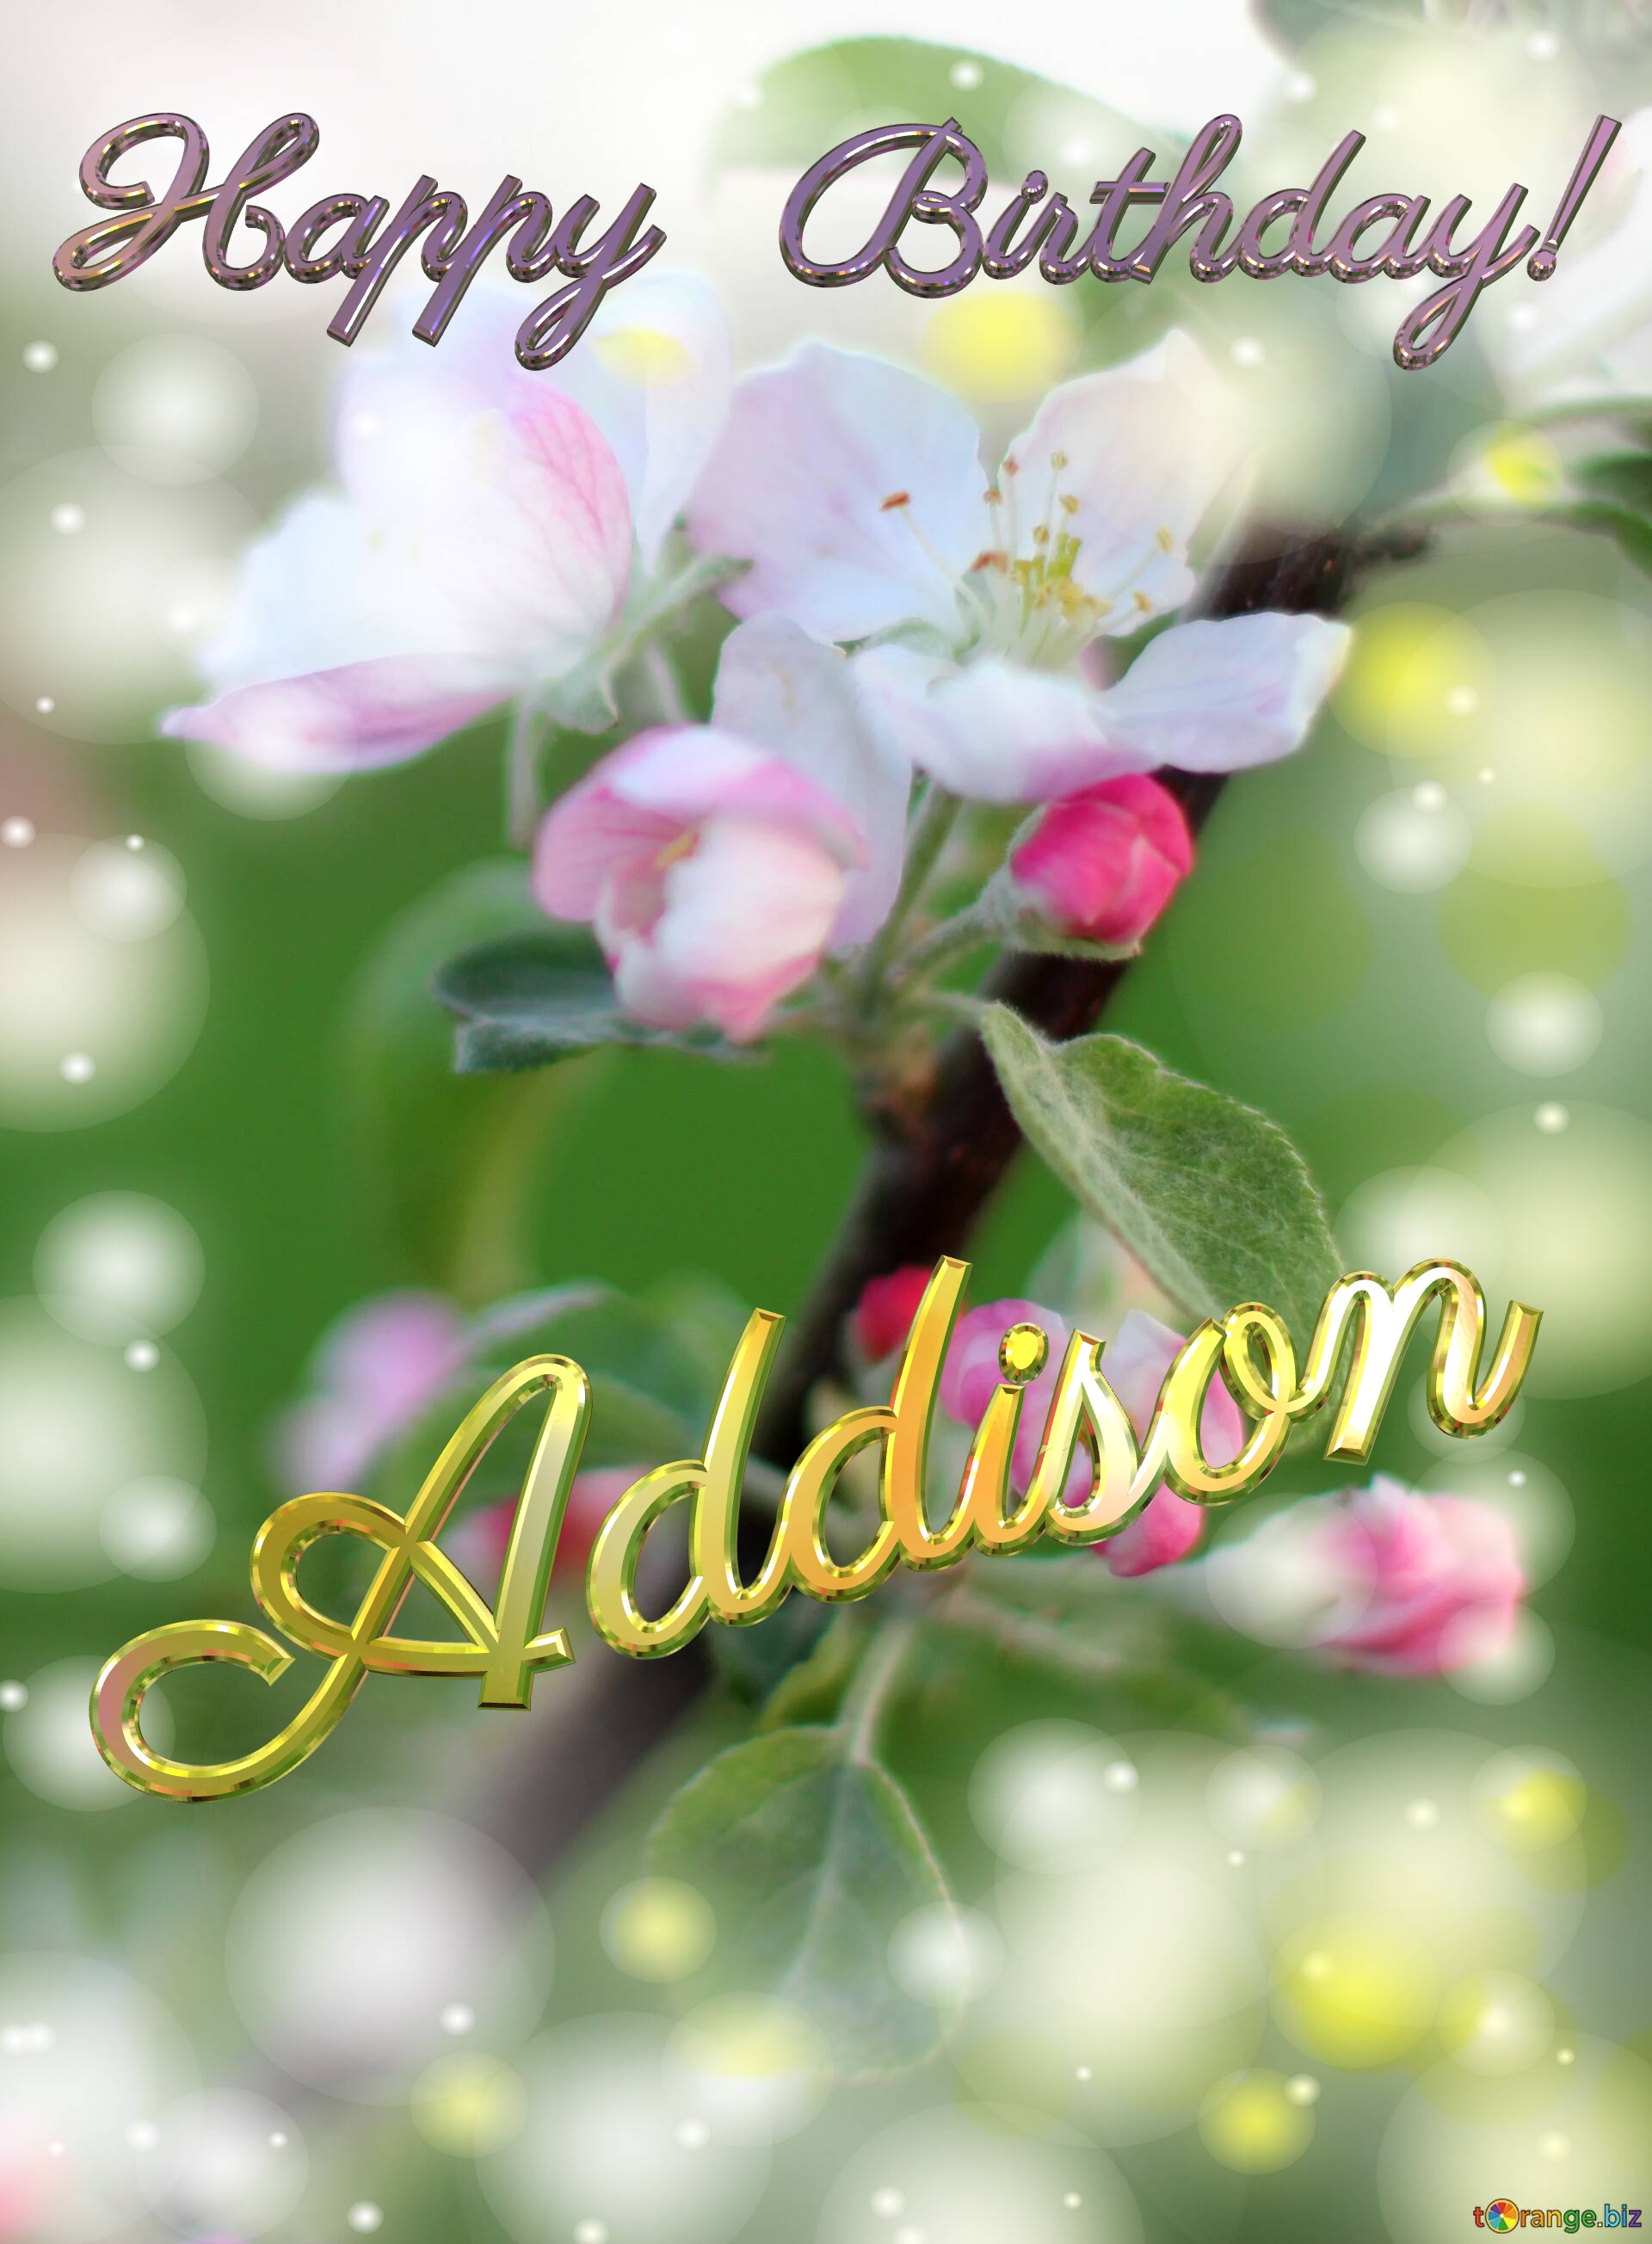 Addison Happy Birthday! Flowers of the Apple-tree background №0